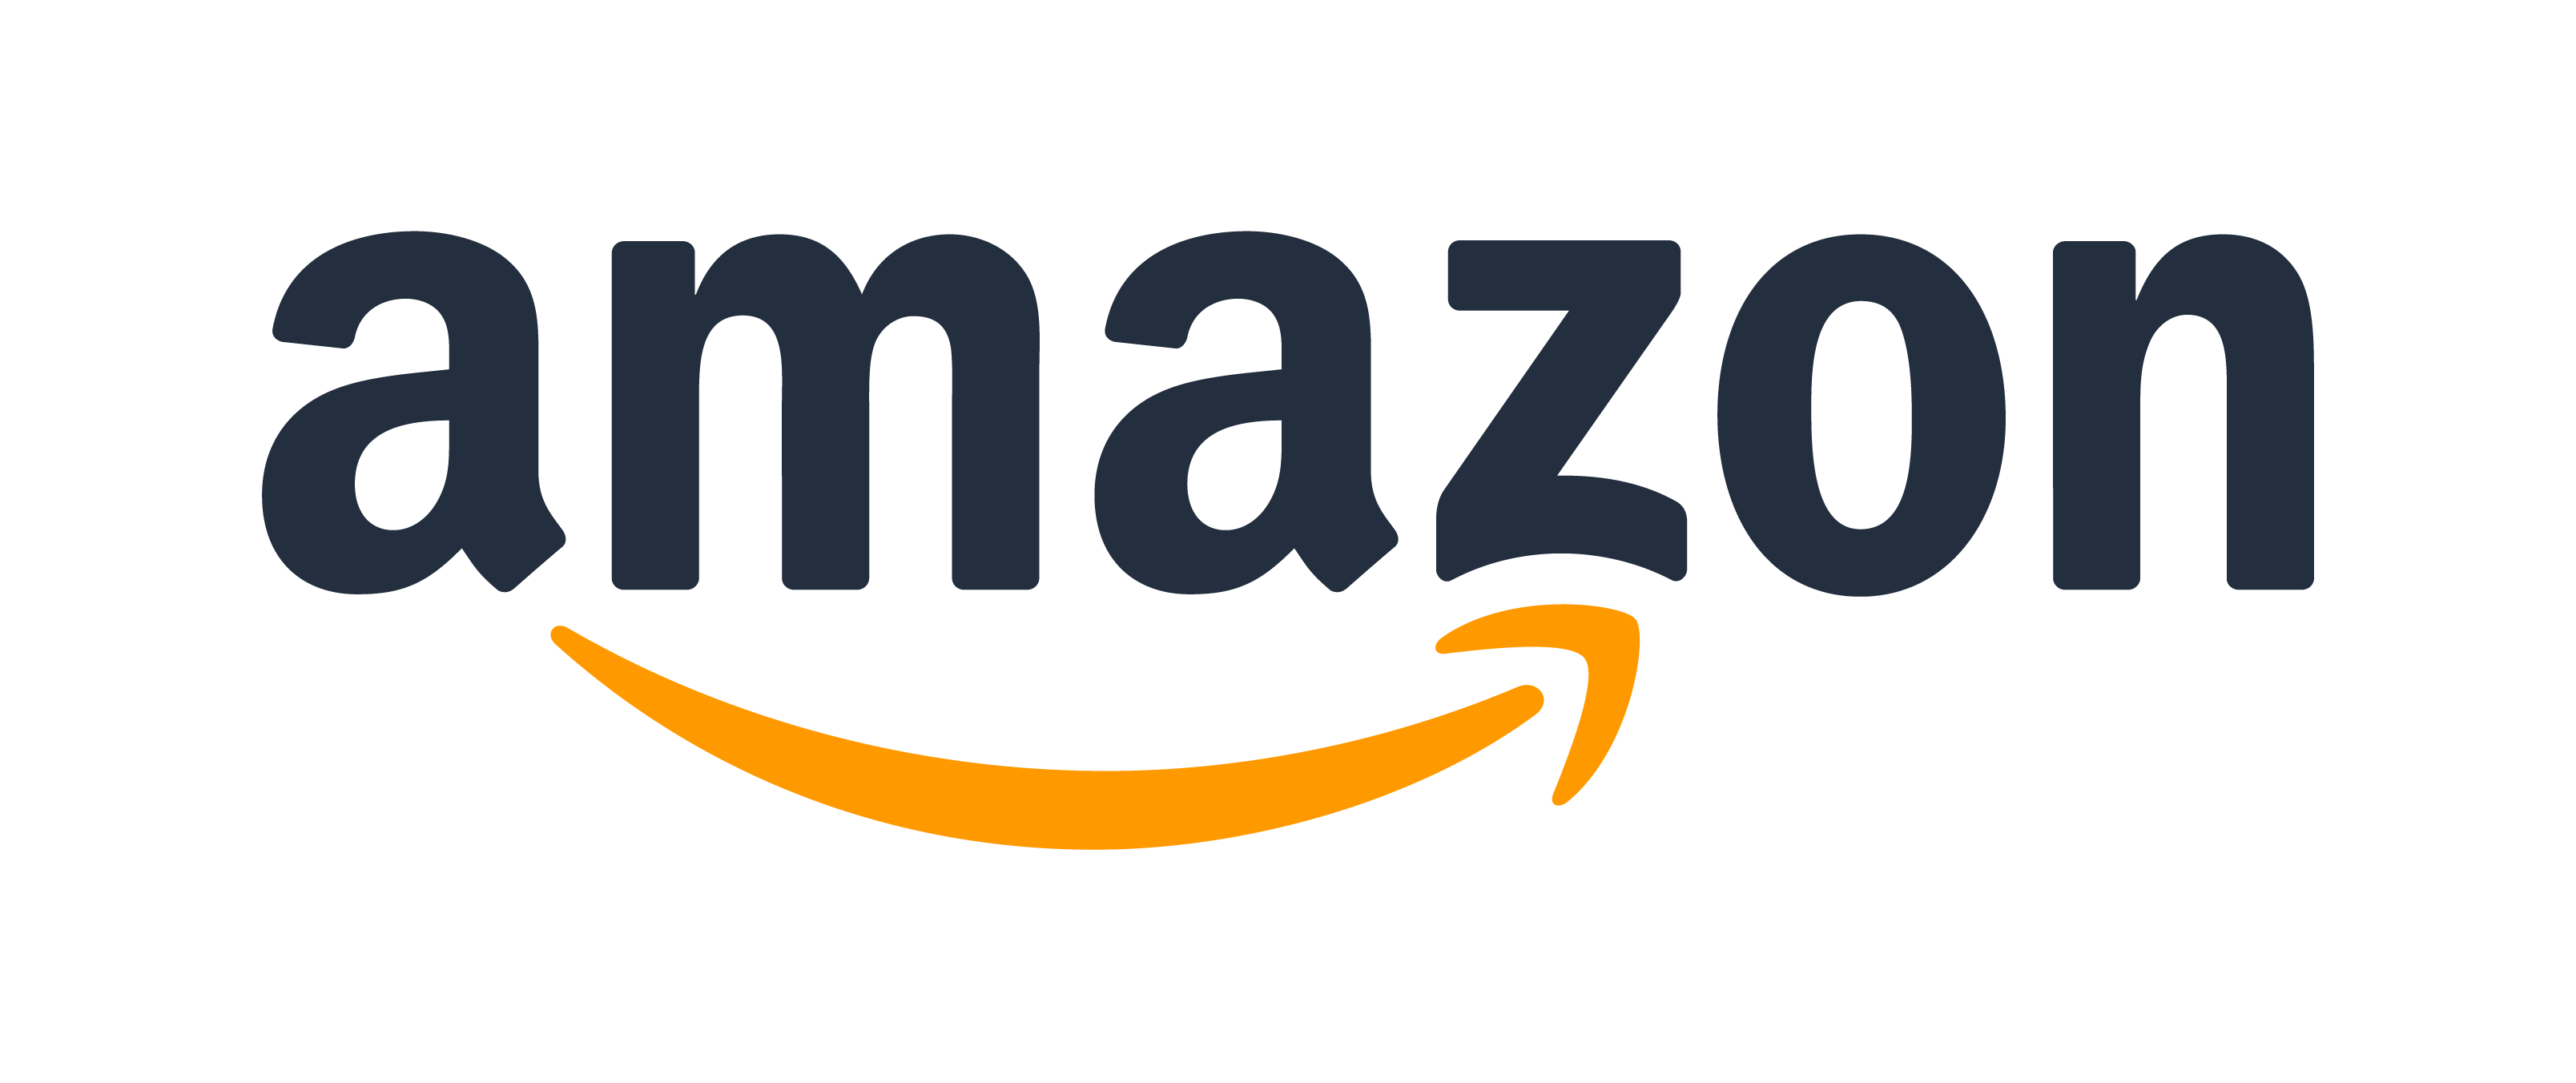 The Amazon logo.